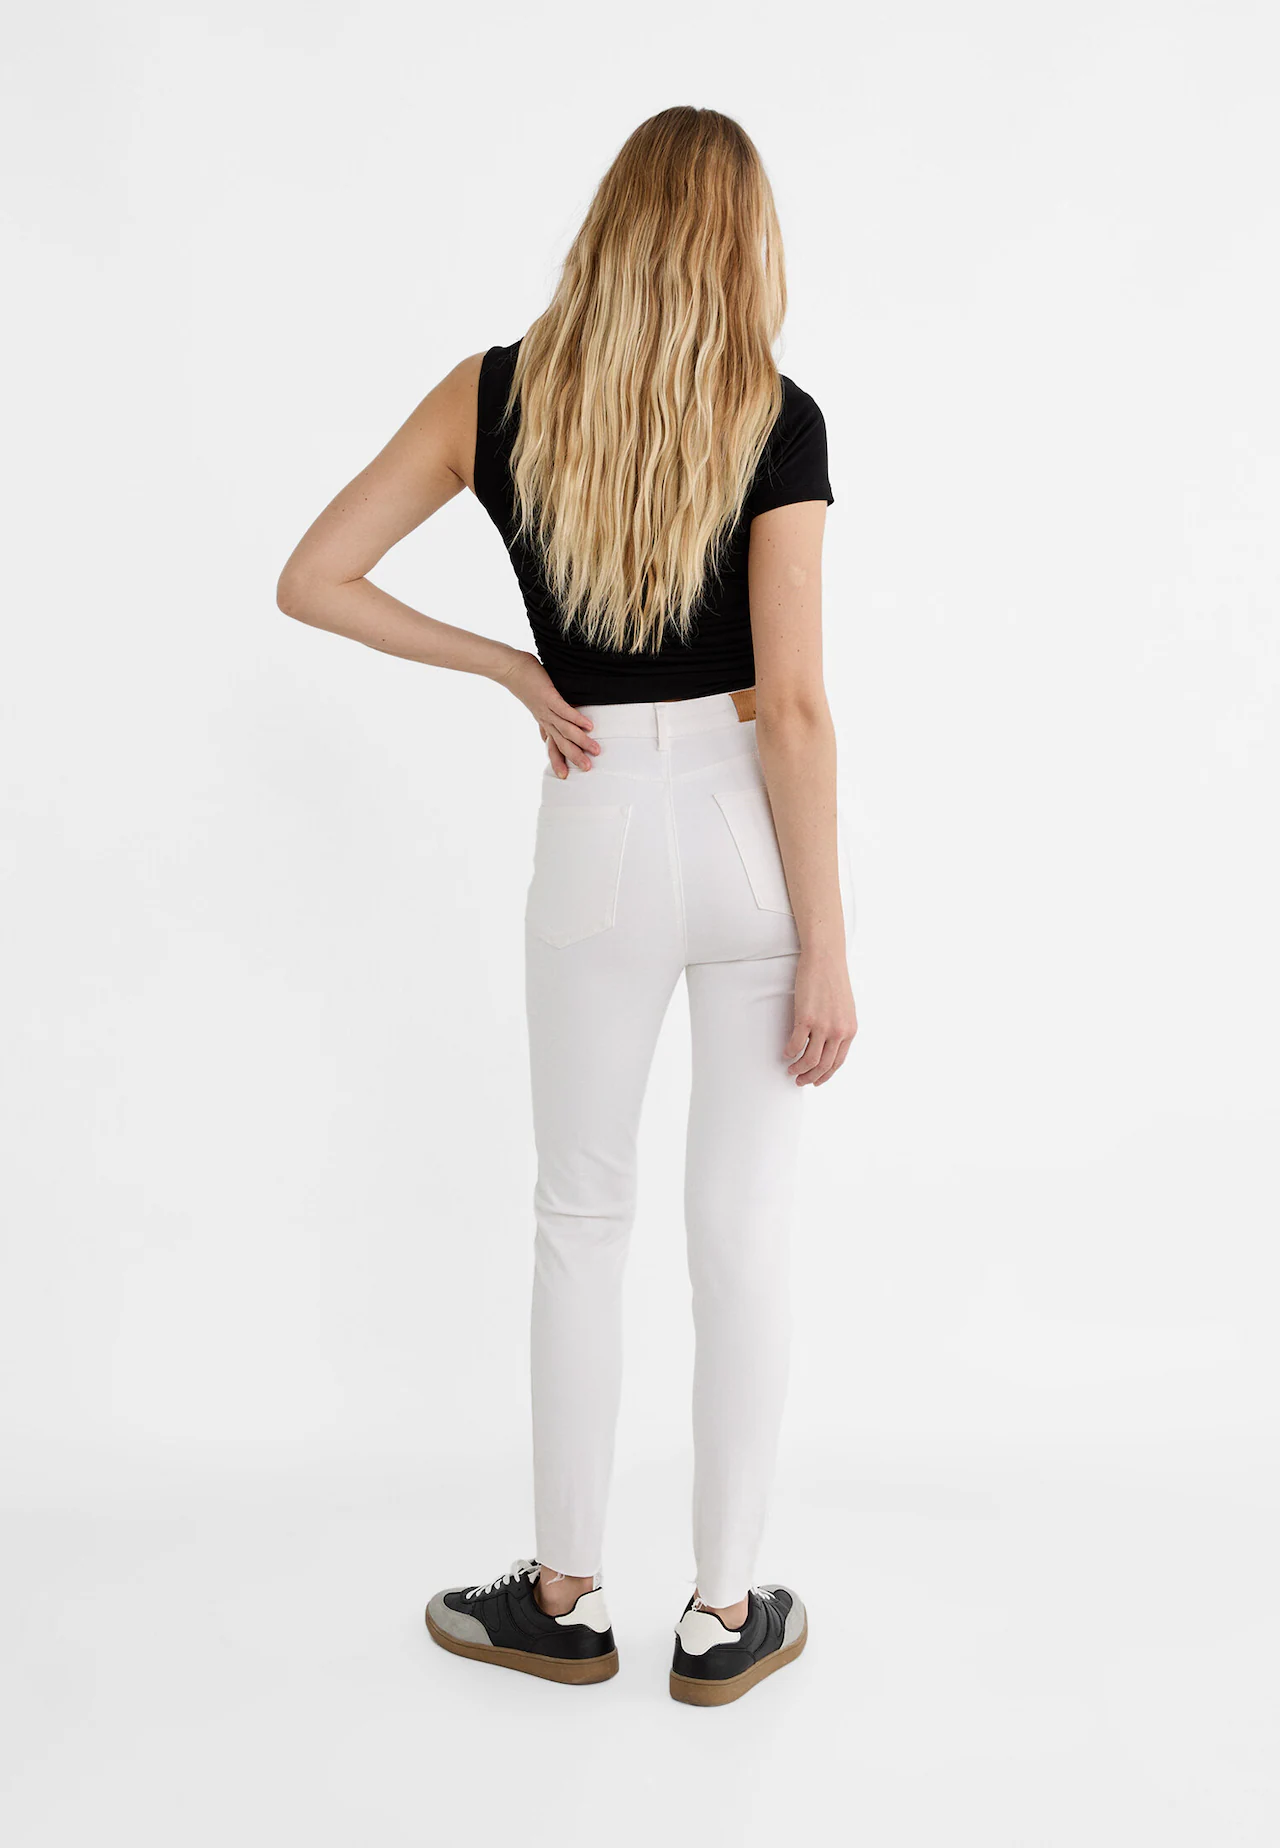 Coloured super high waist jeans - Women's fashion